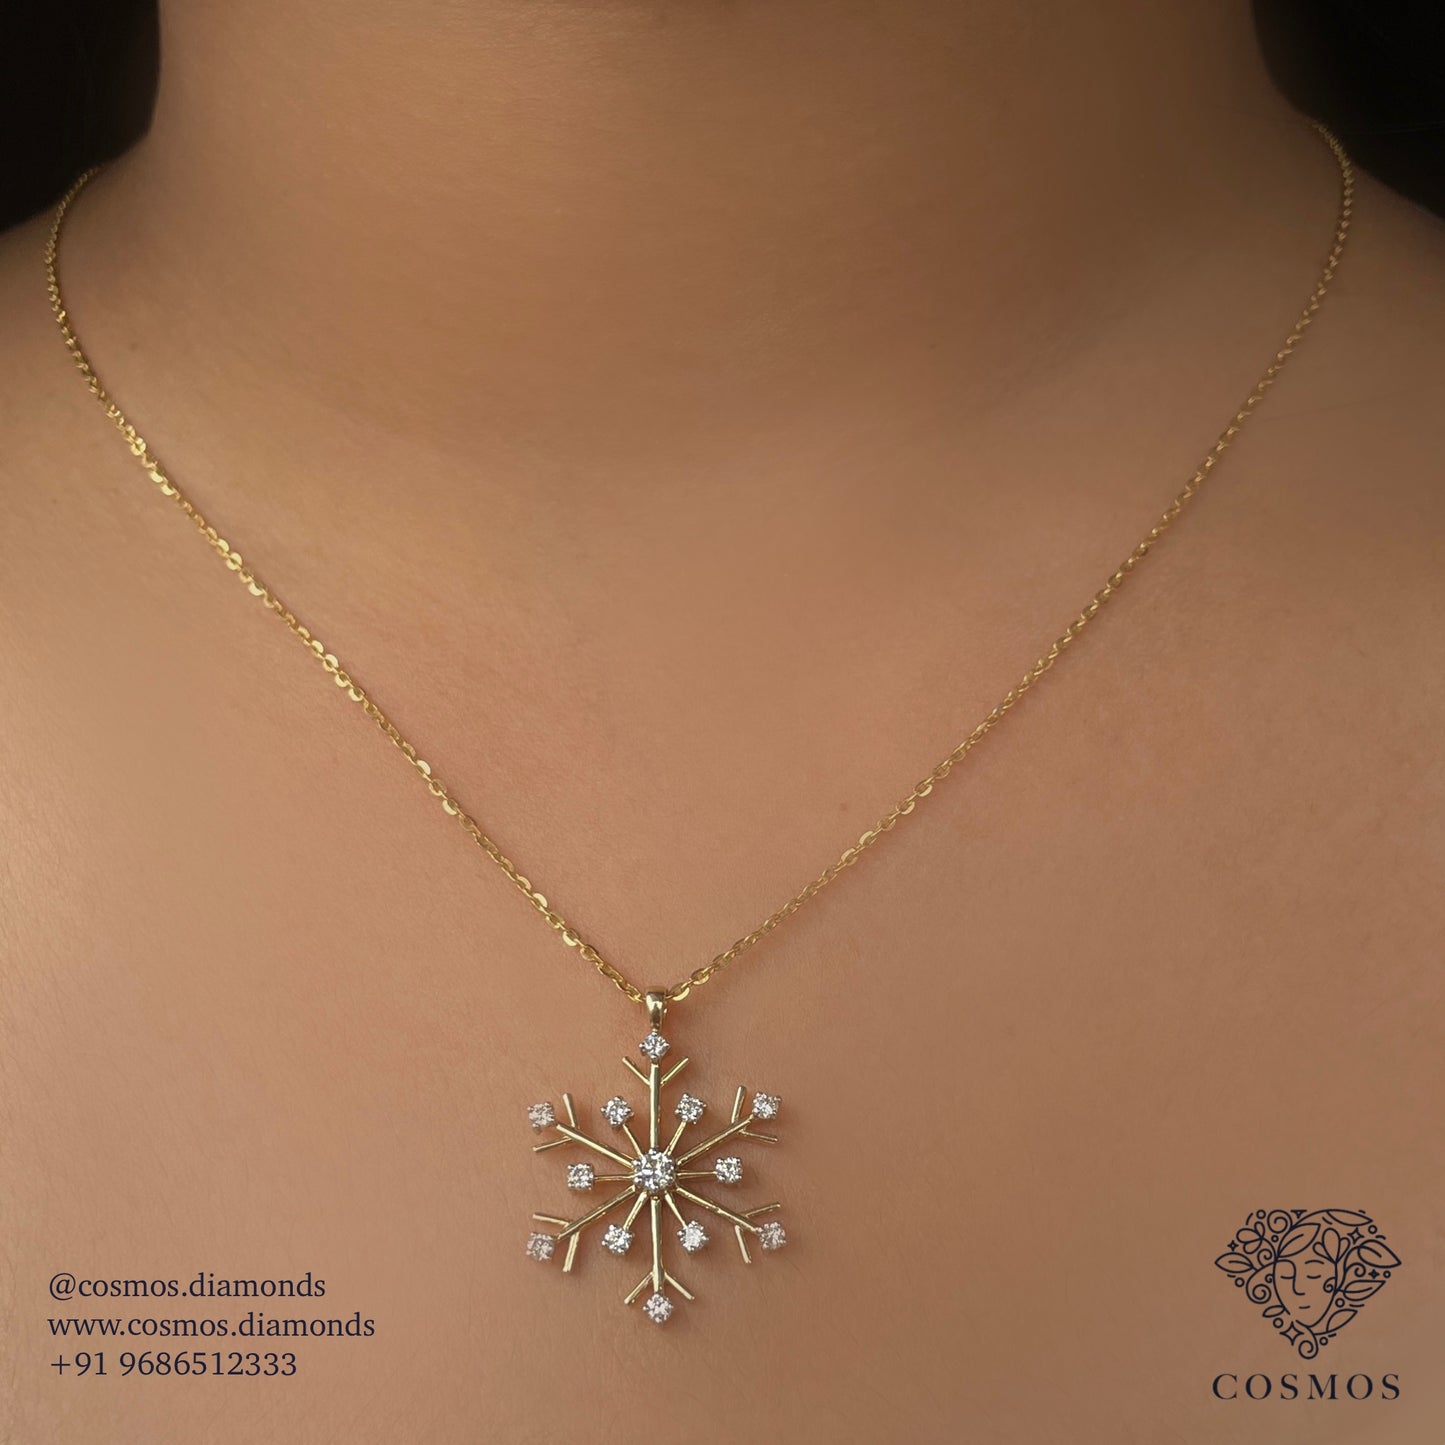 snowflake pendant, gold pendant, diamond pendant, magic pendant, cosmos diamonds